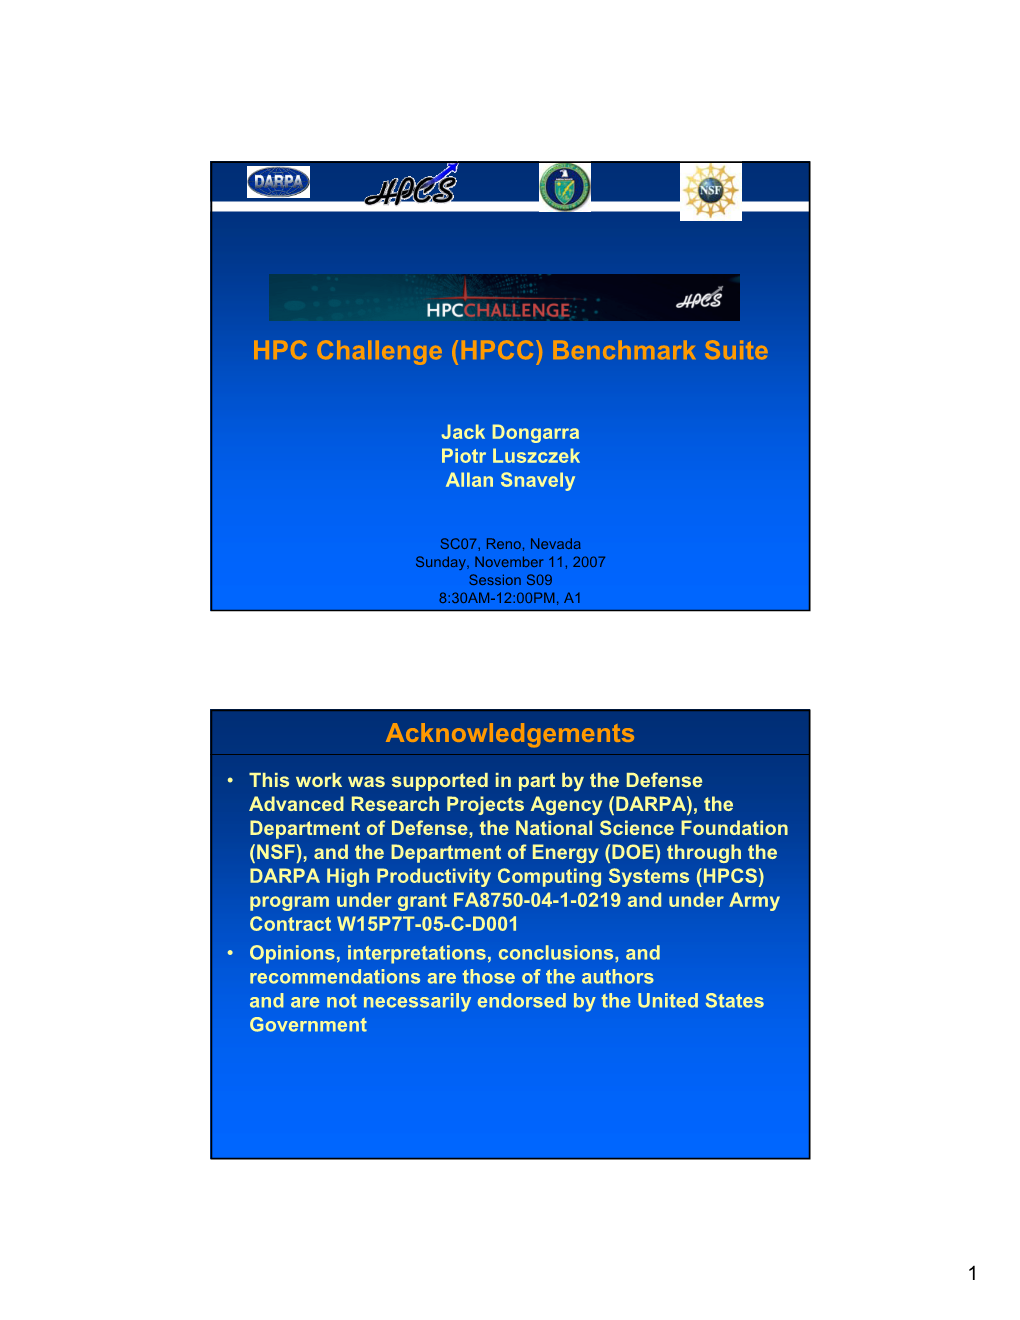 HPC Challenge (HPCC) Benchmark Suite Acknowledgements